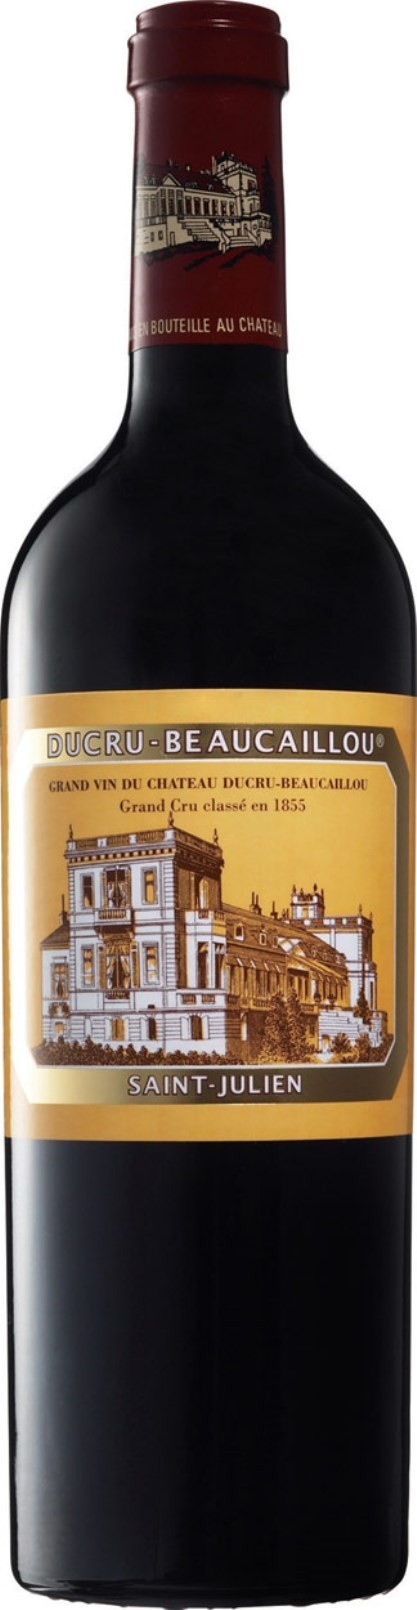 Chateau Ducru Beaucaillou 2015, Saint Julien